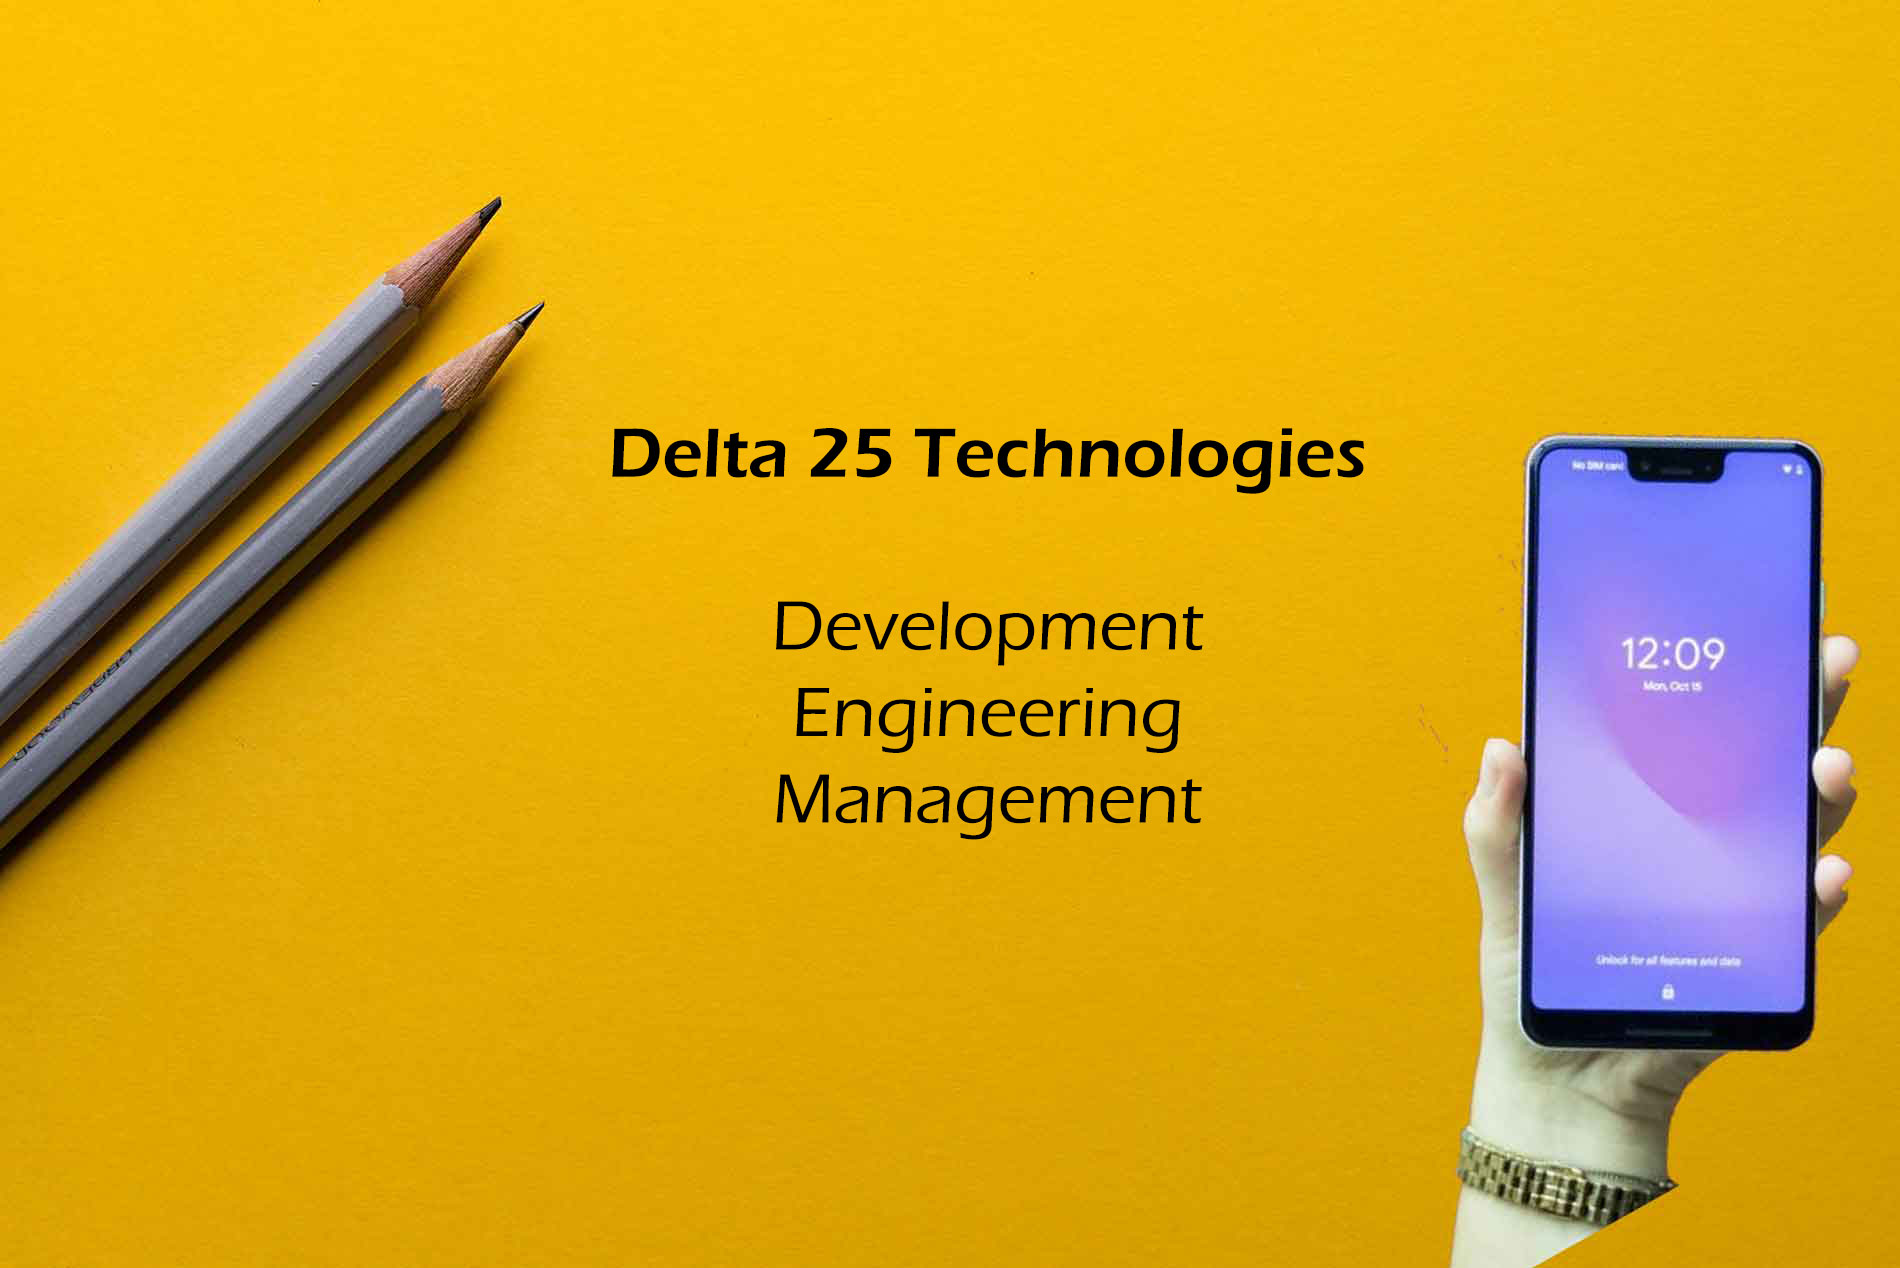 Delta 25 Technologies